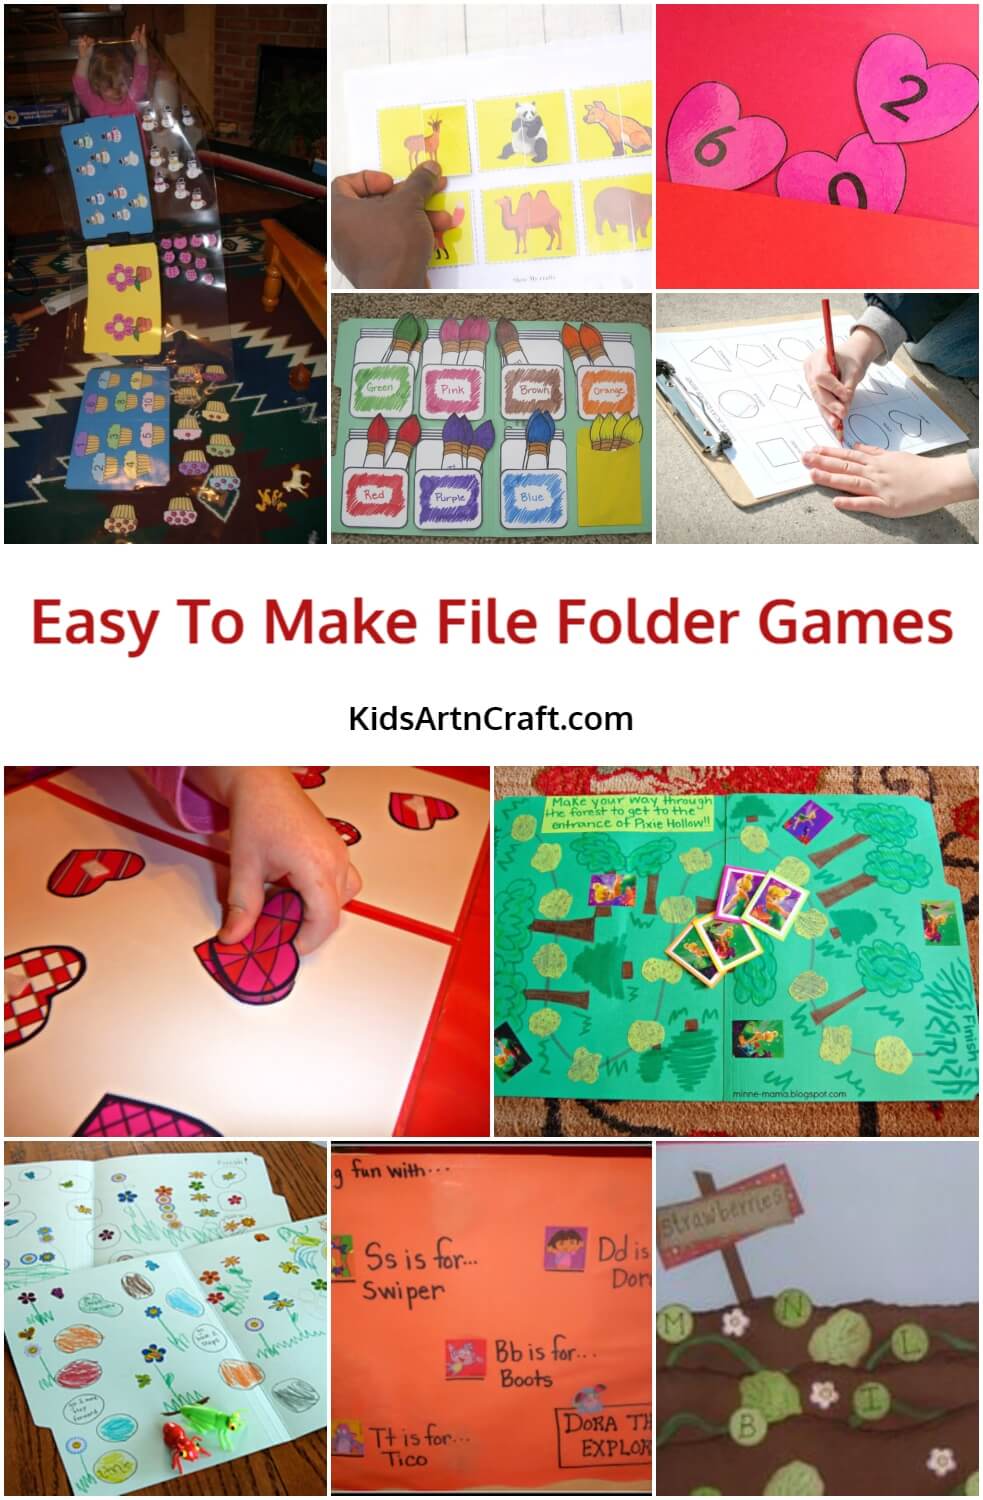  Easy To Make File Folder Games